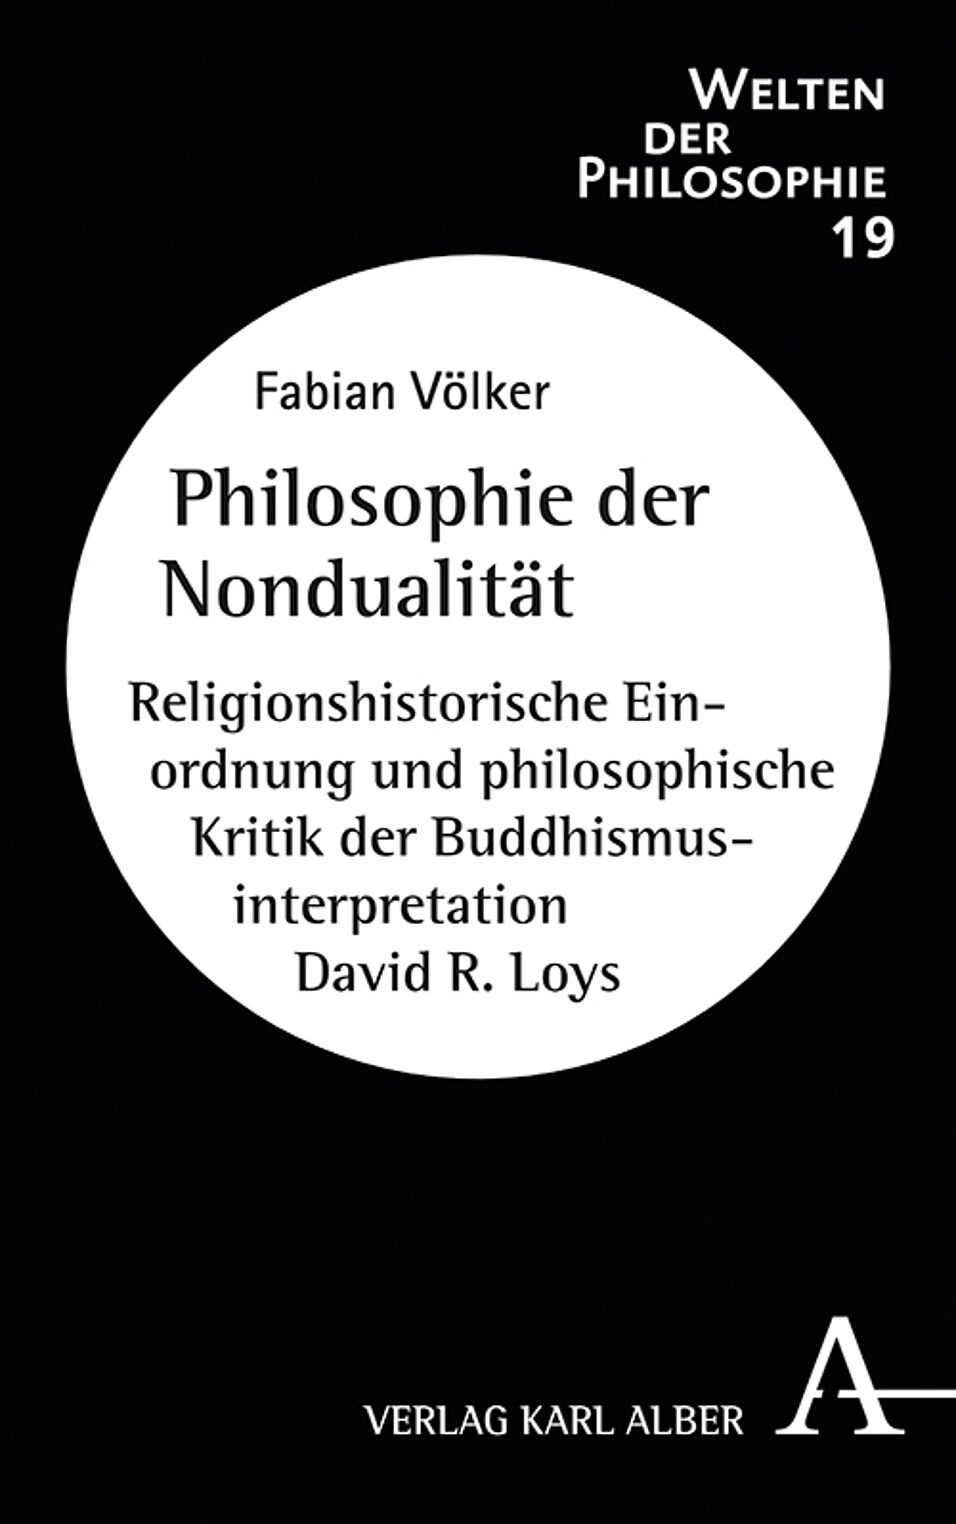 Fabian Völker Buchcover Philosophie der Nondualität 2020